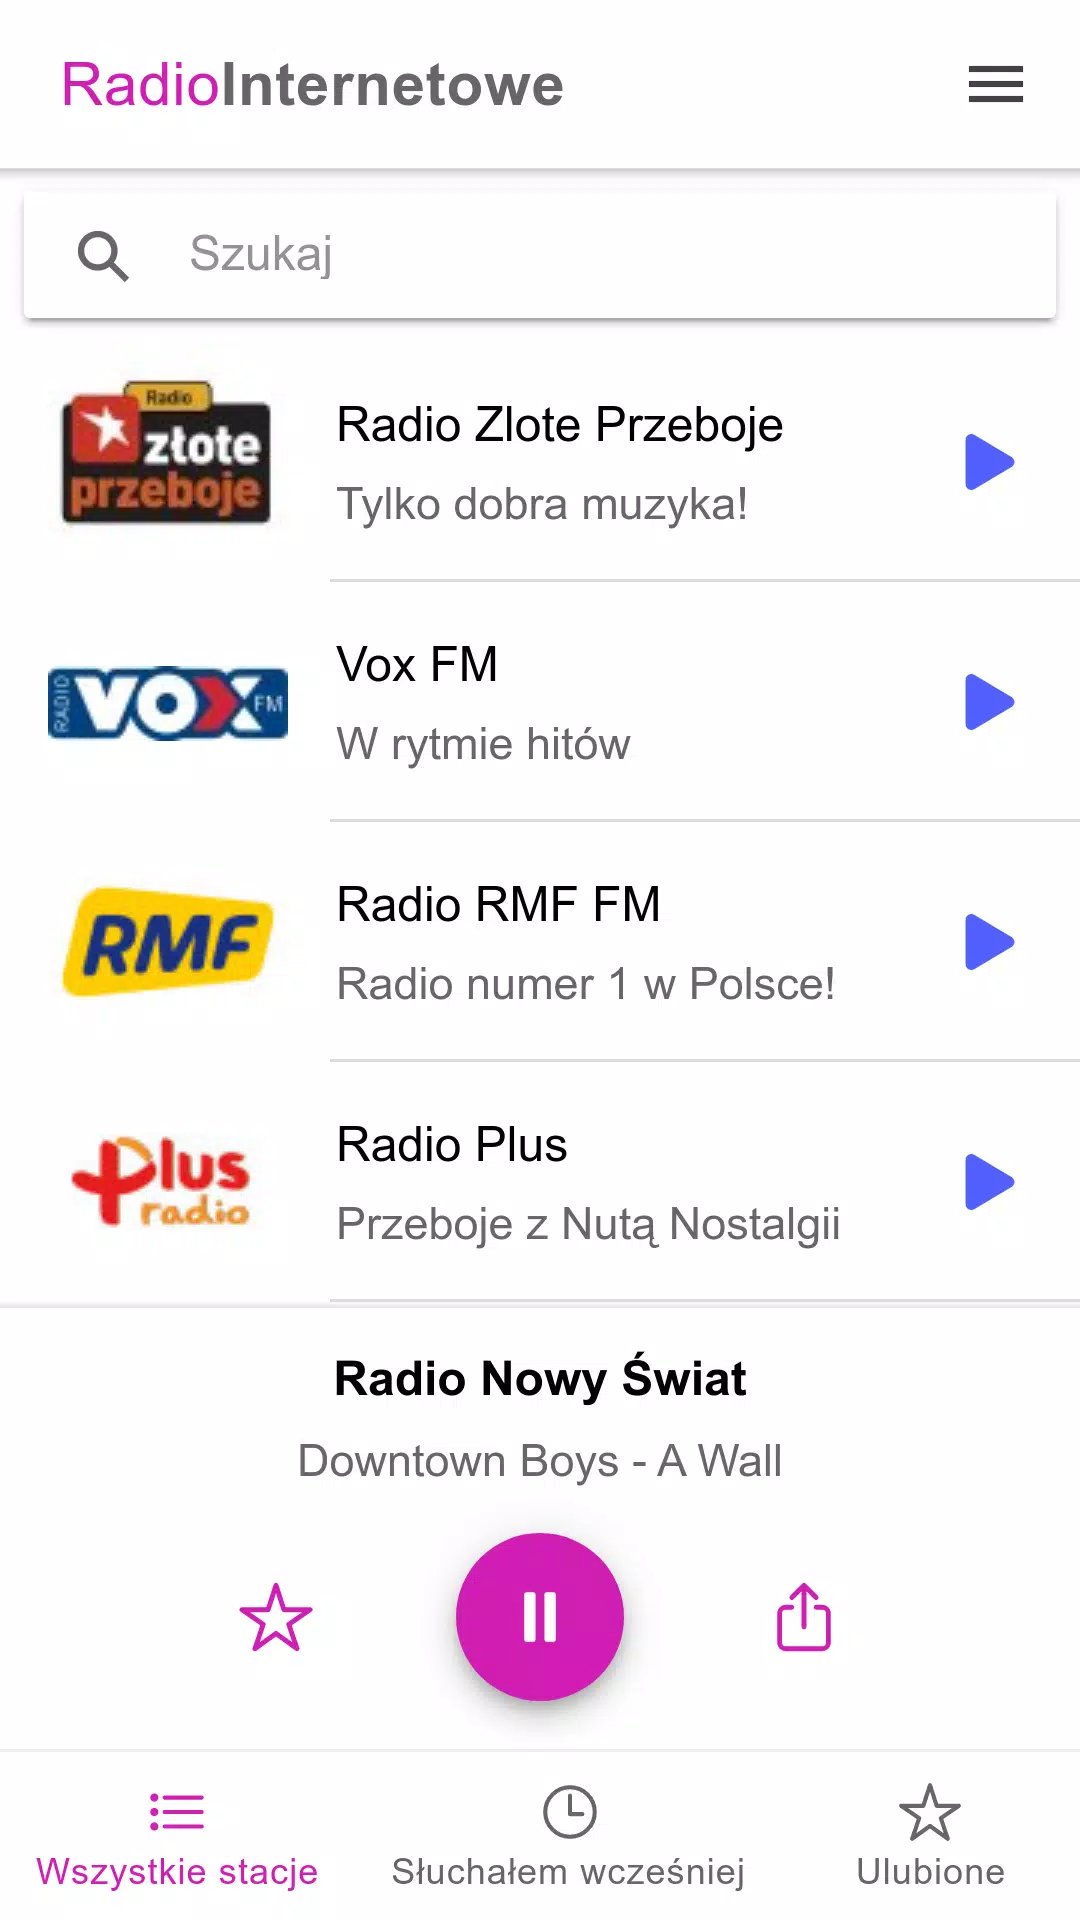 Polskie radio internetowe for Android - APK Download